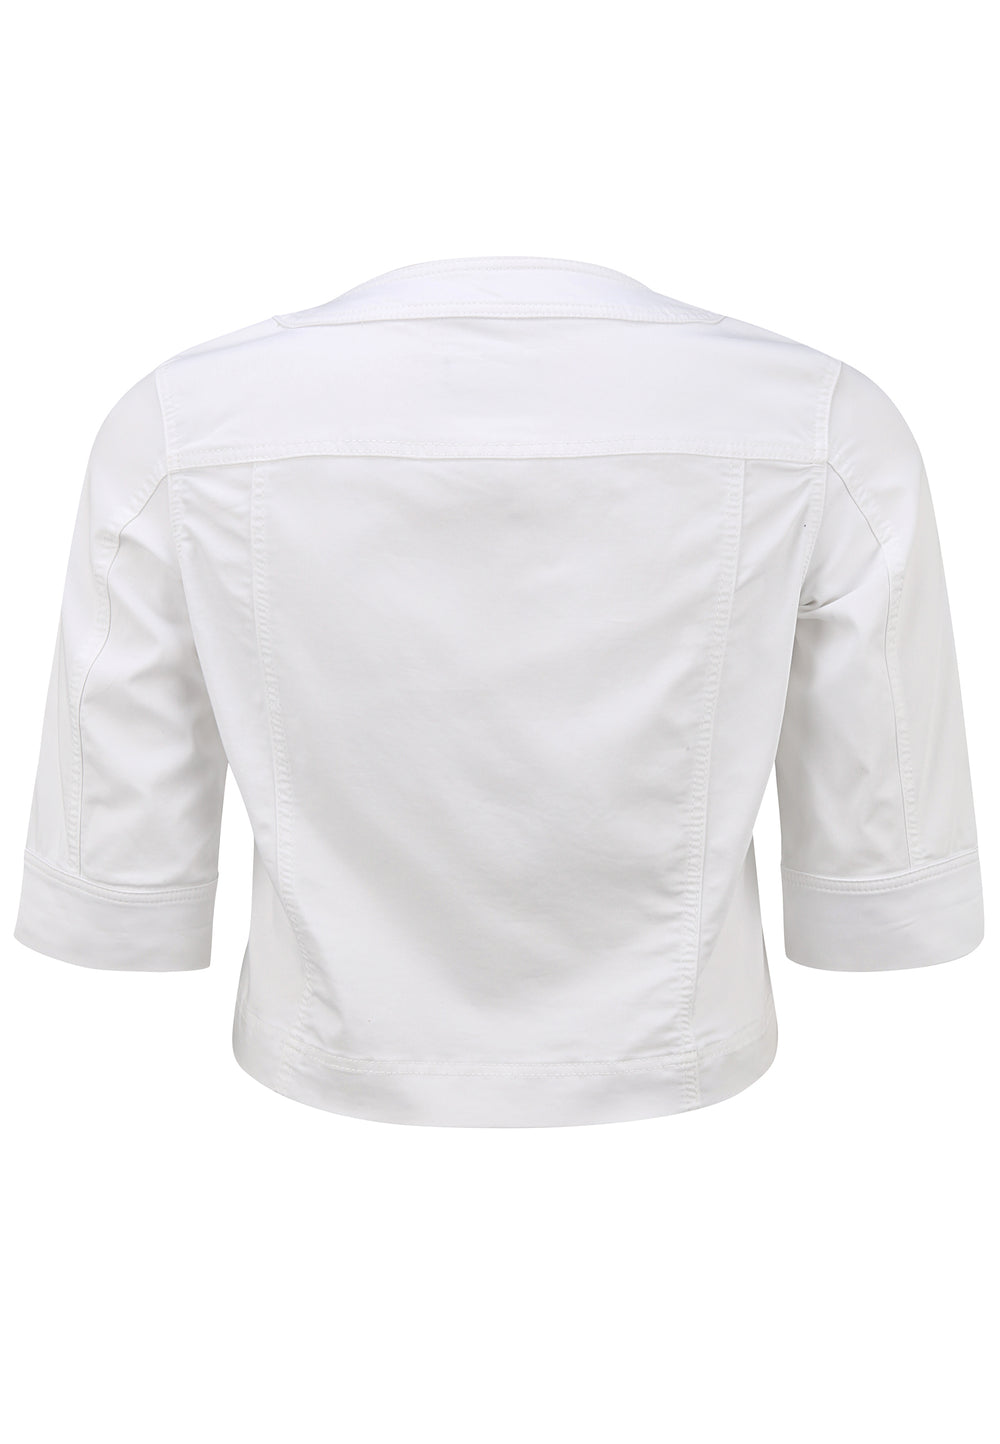 wit vestje met toffe studs - doris streich - 390199 - grote maten - dameskleding - kledingwinkel - herent - leuven